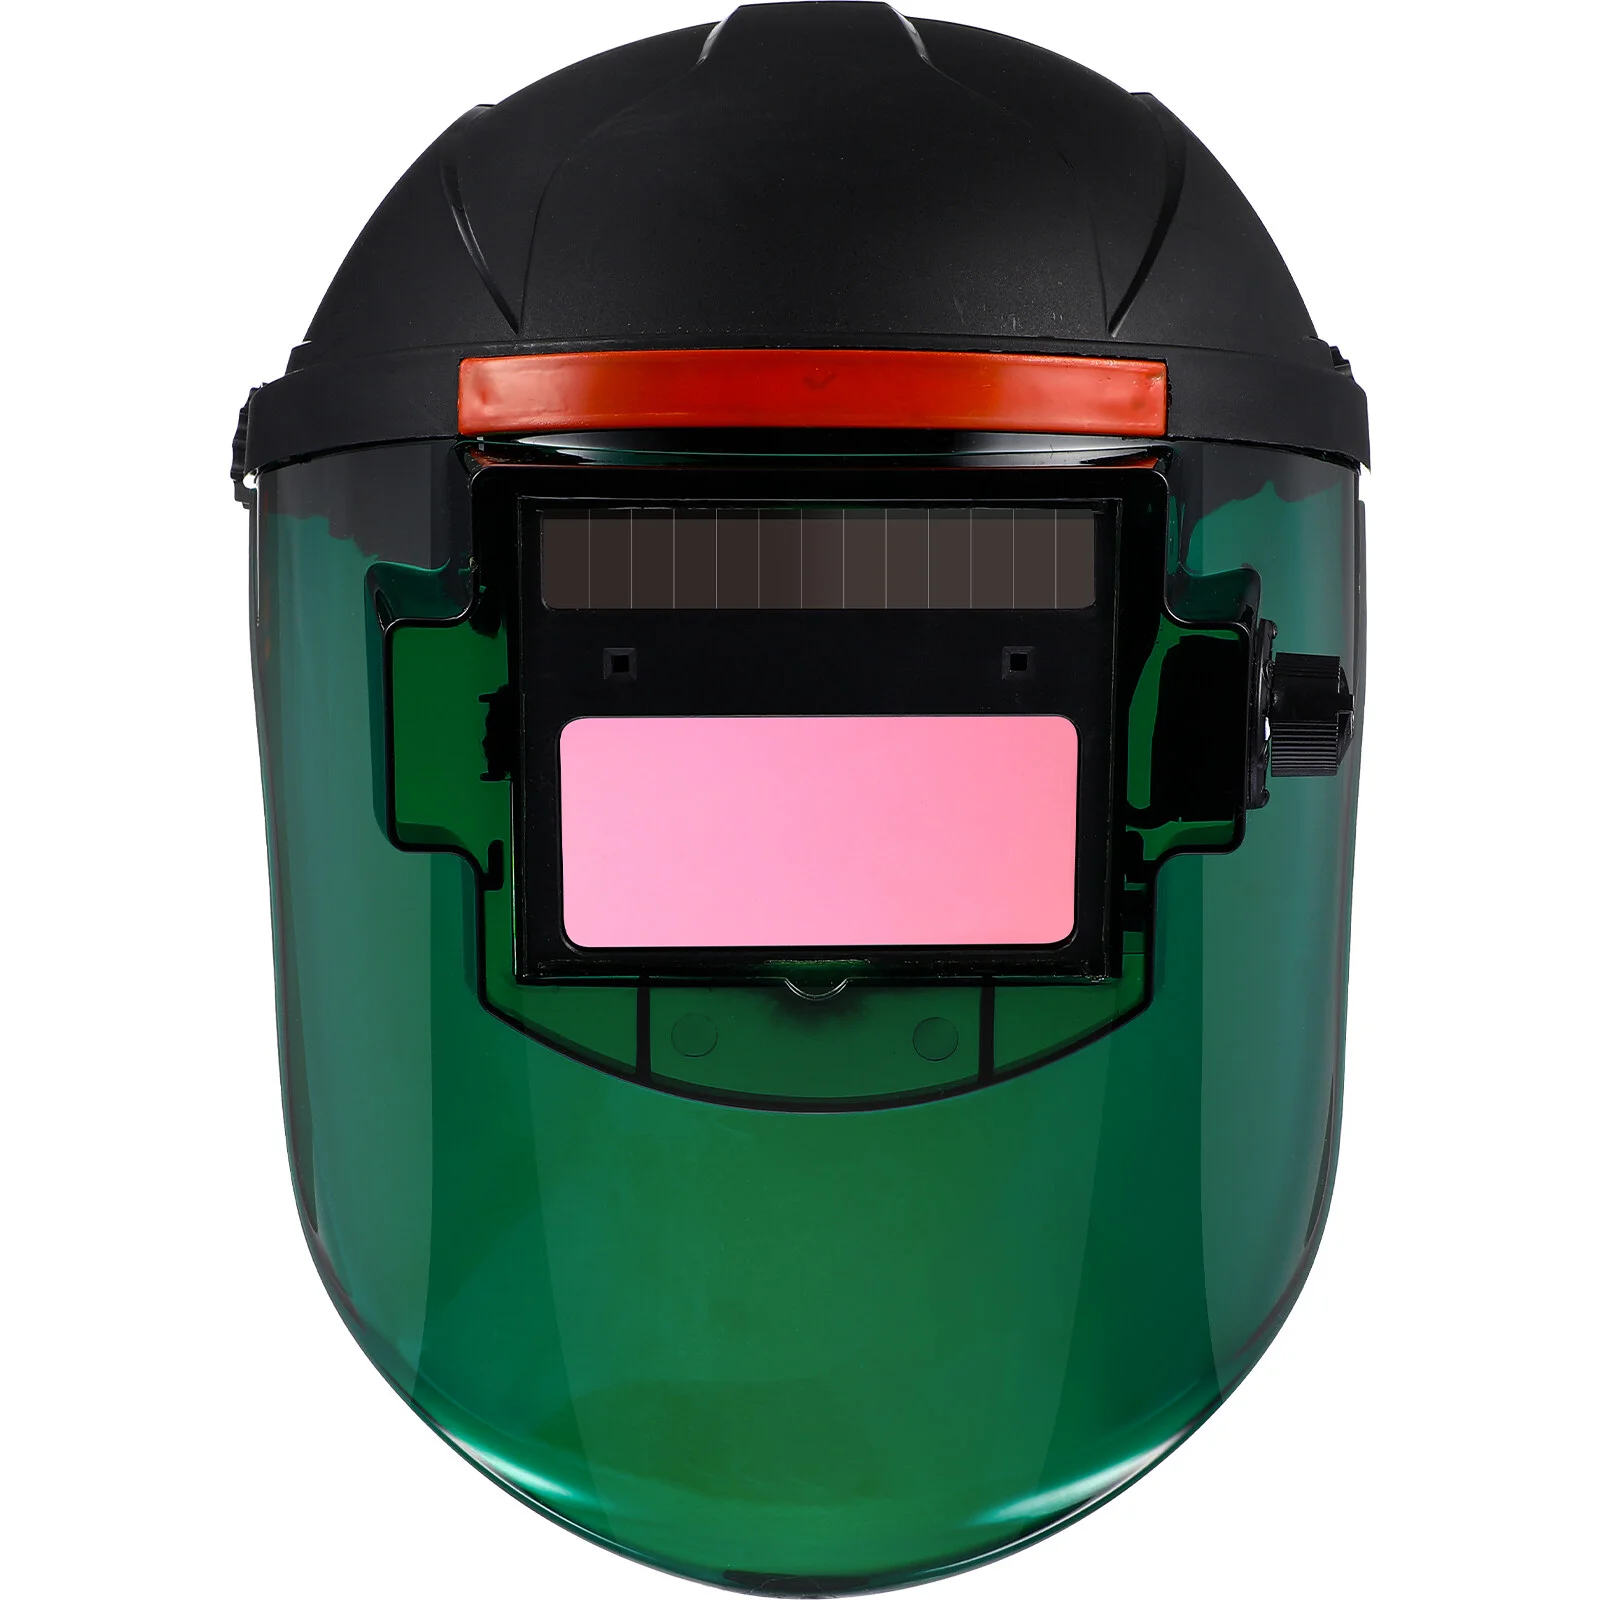 

Welder Welding Hood Solar Rechargeable Mask Clear Glasses Auto Darkening Headset Argon Arc Hat